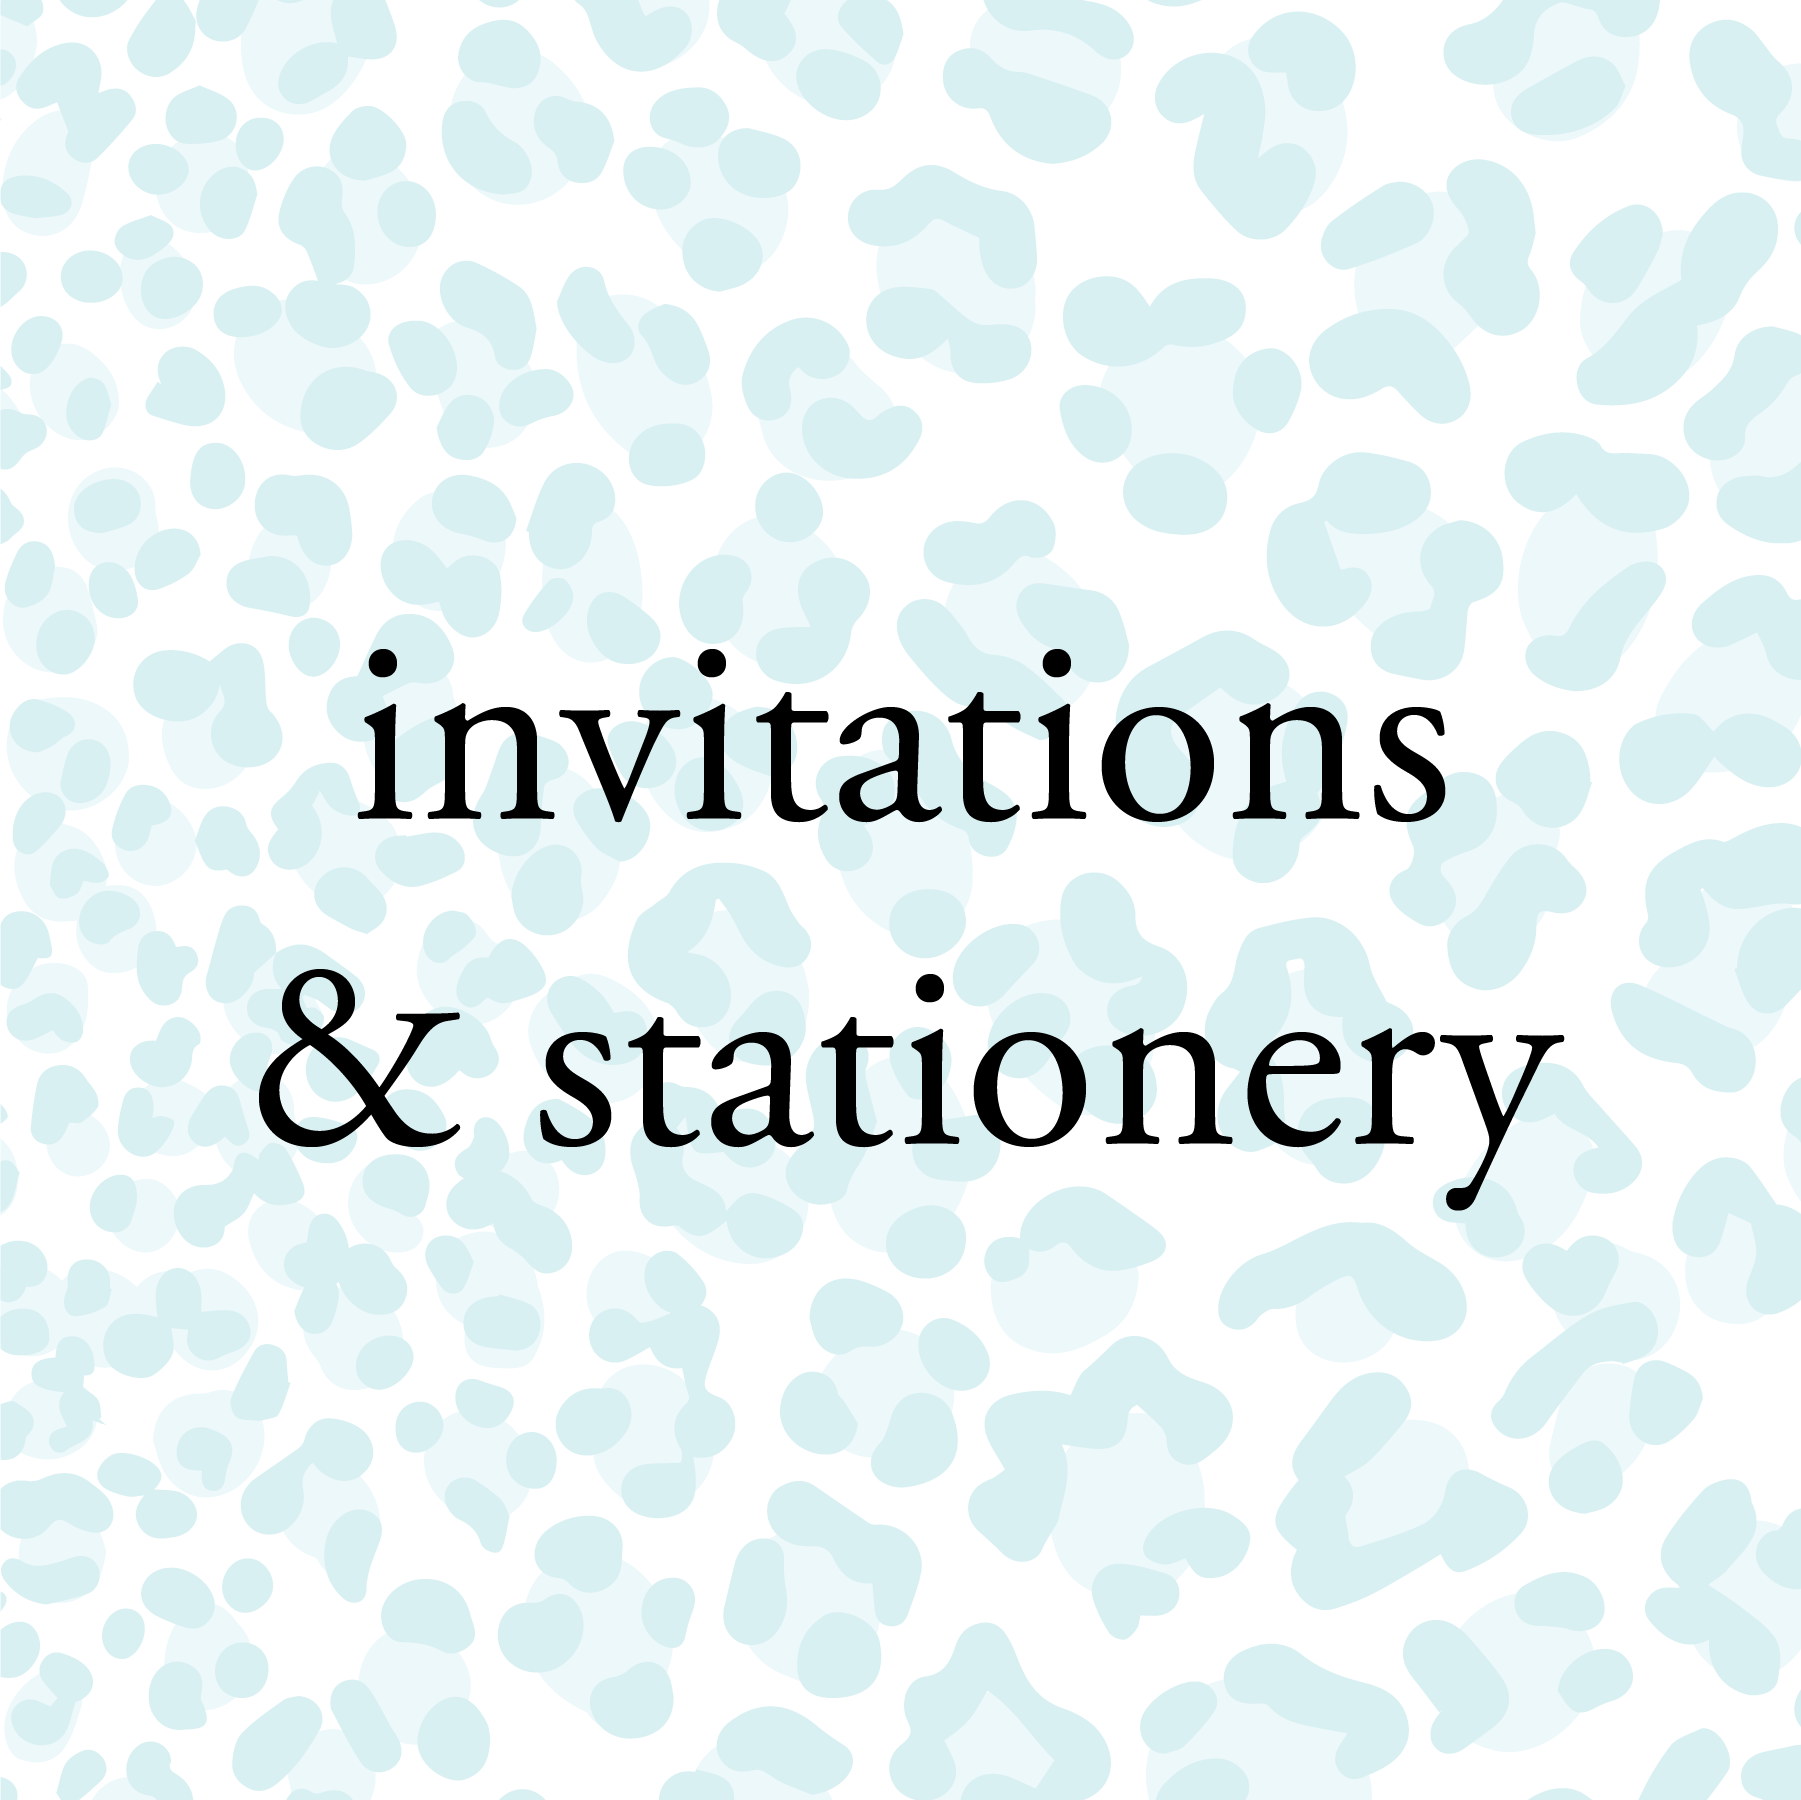 invitations & stationery